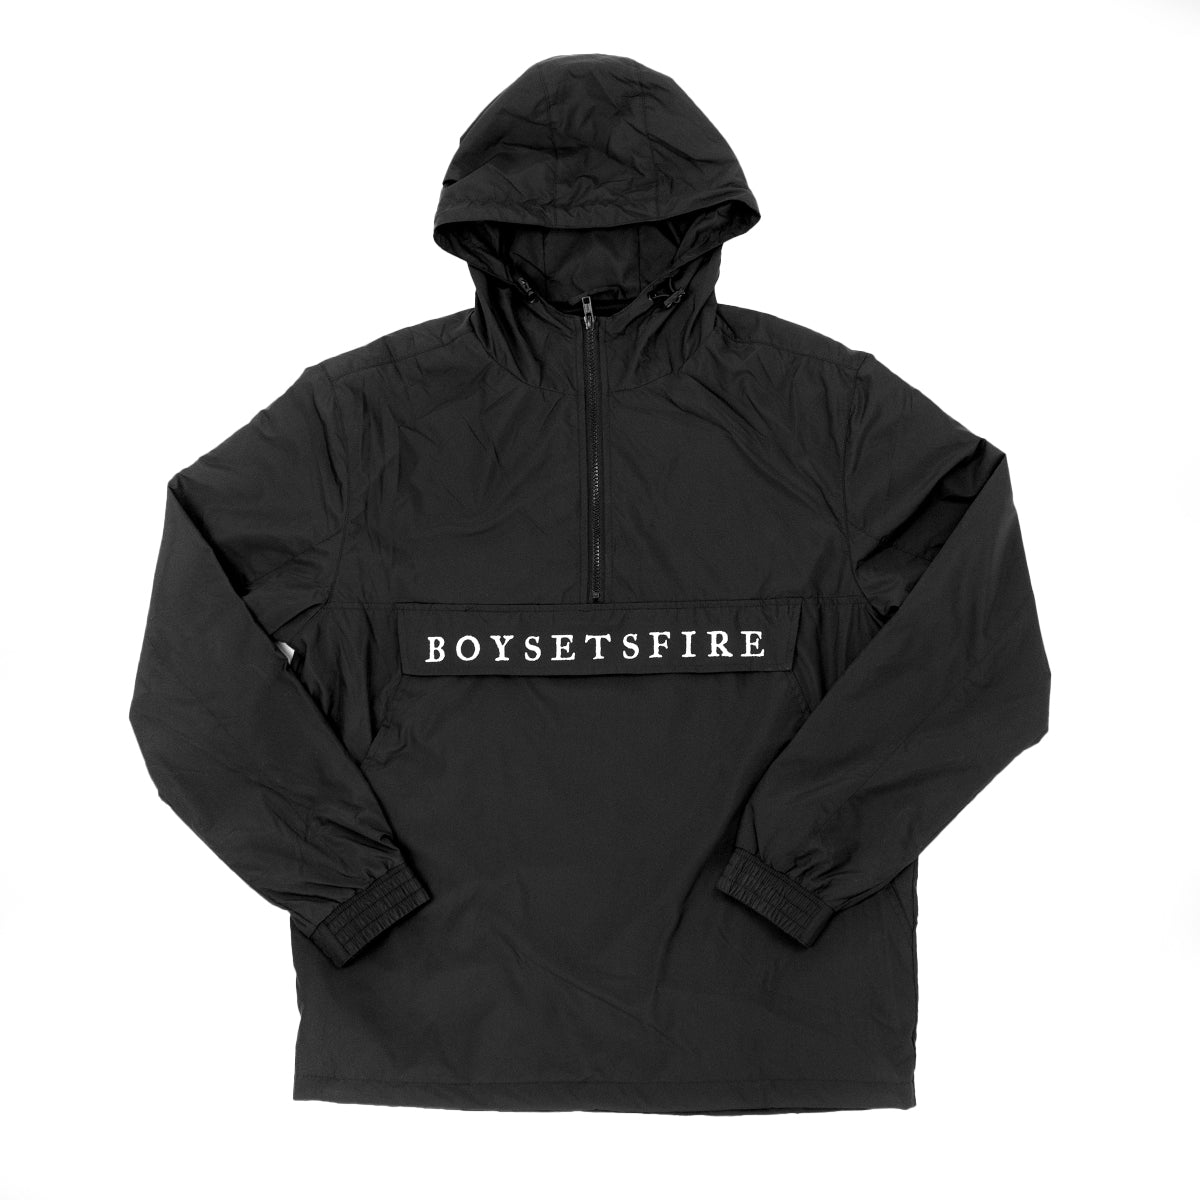 BOYSETSFIRE "Logo" Pullover Jacket